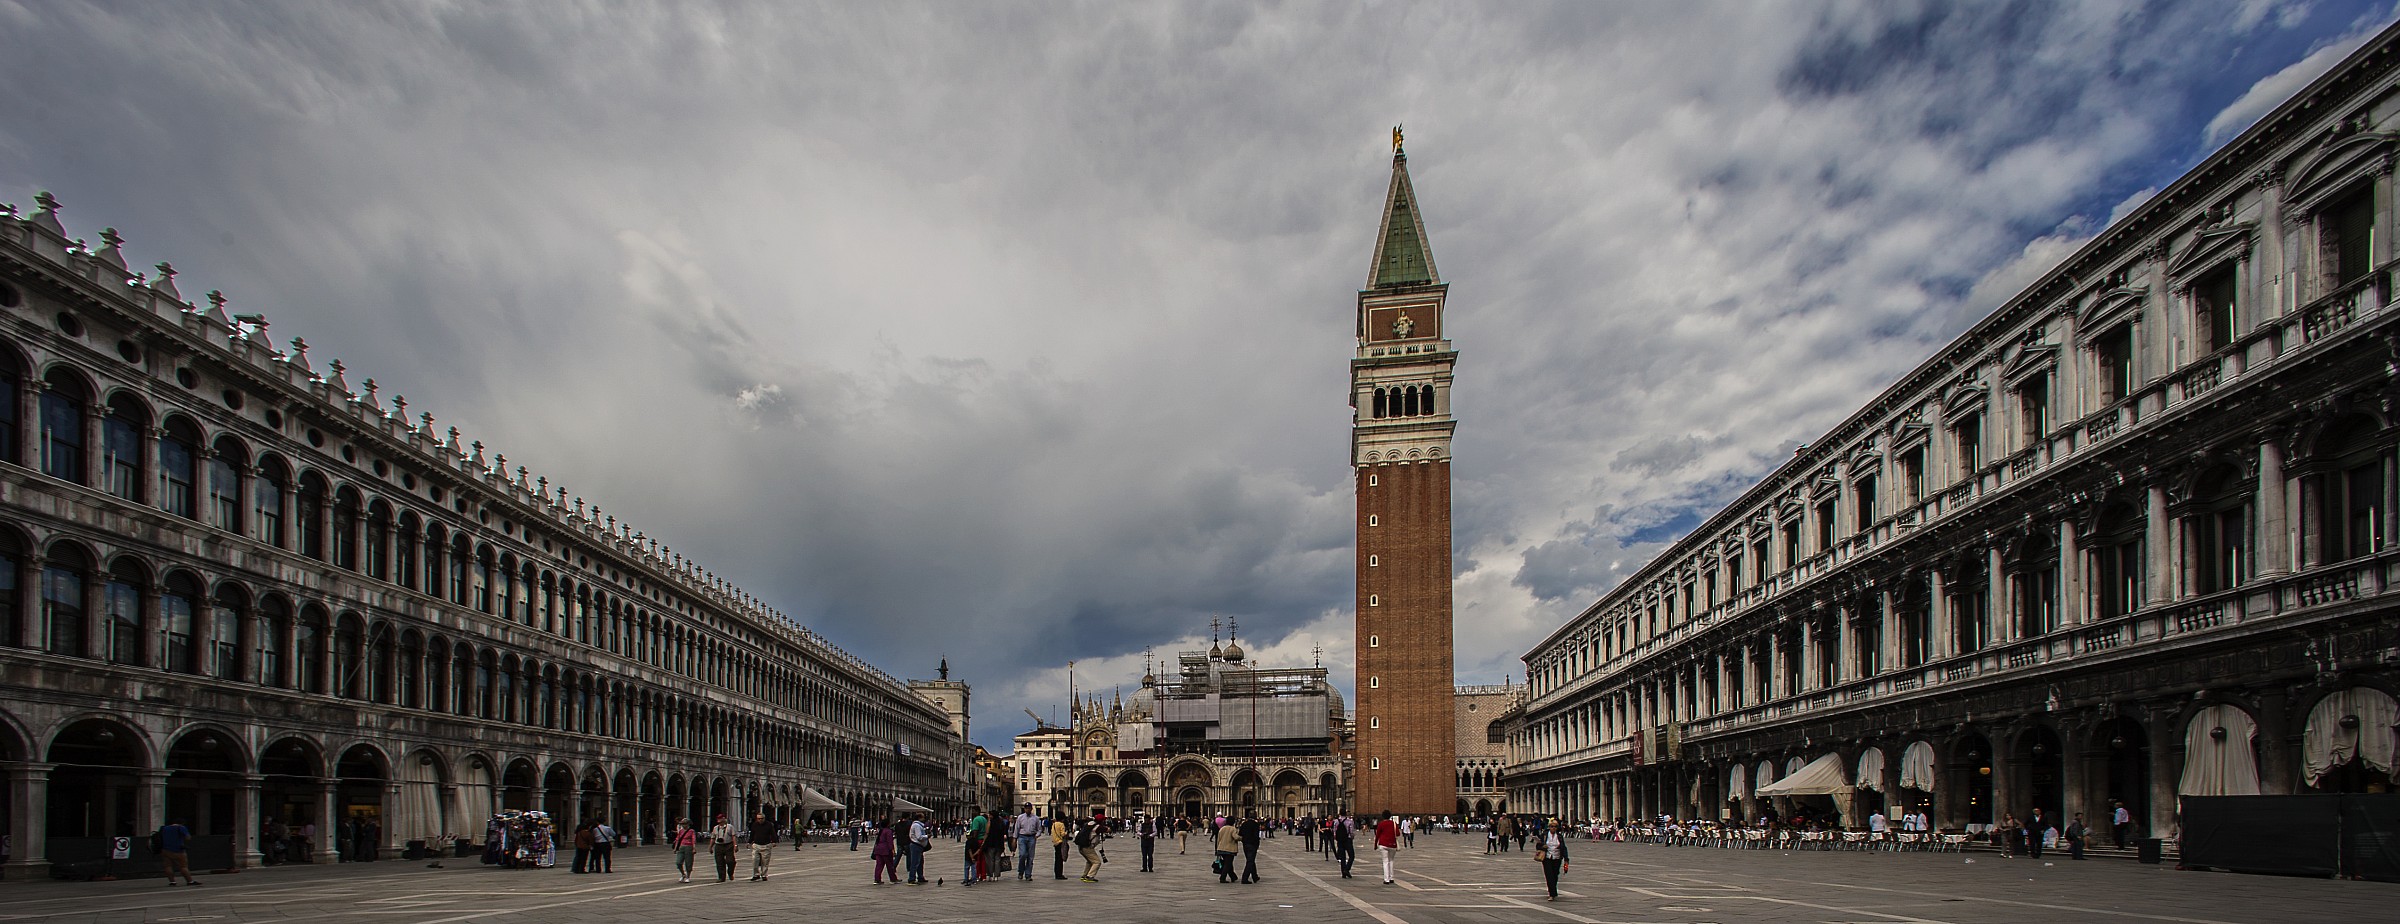 Piazza S. Marco vista come i quadri di Francesco Guardi...